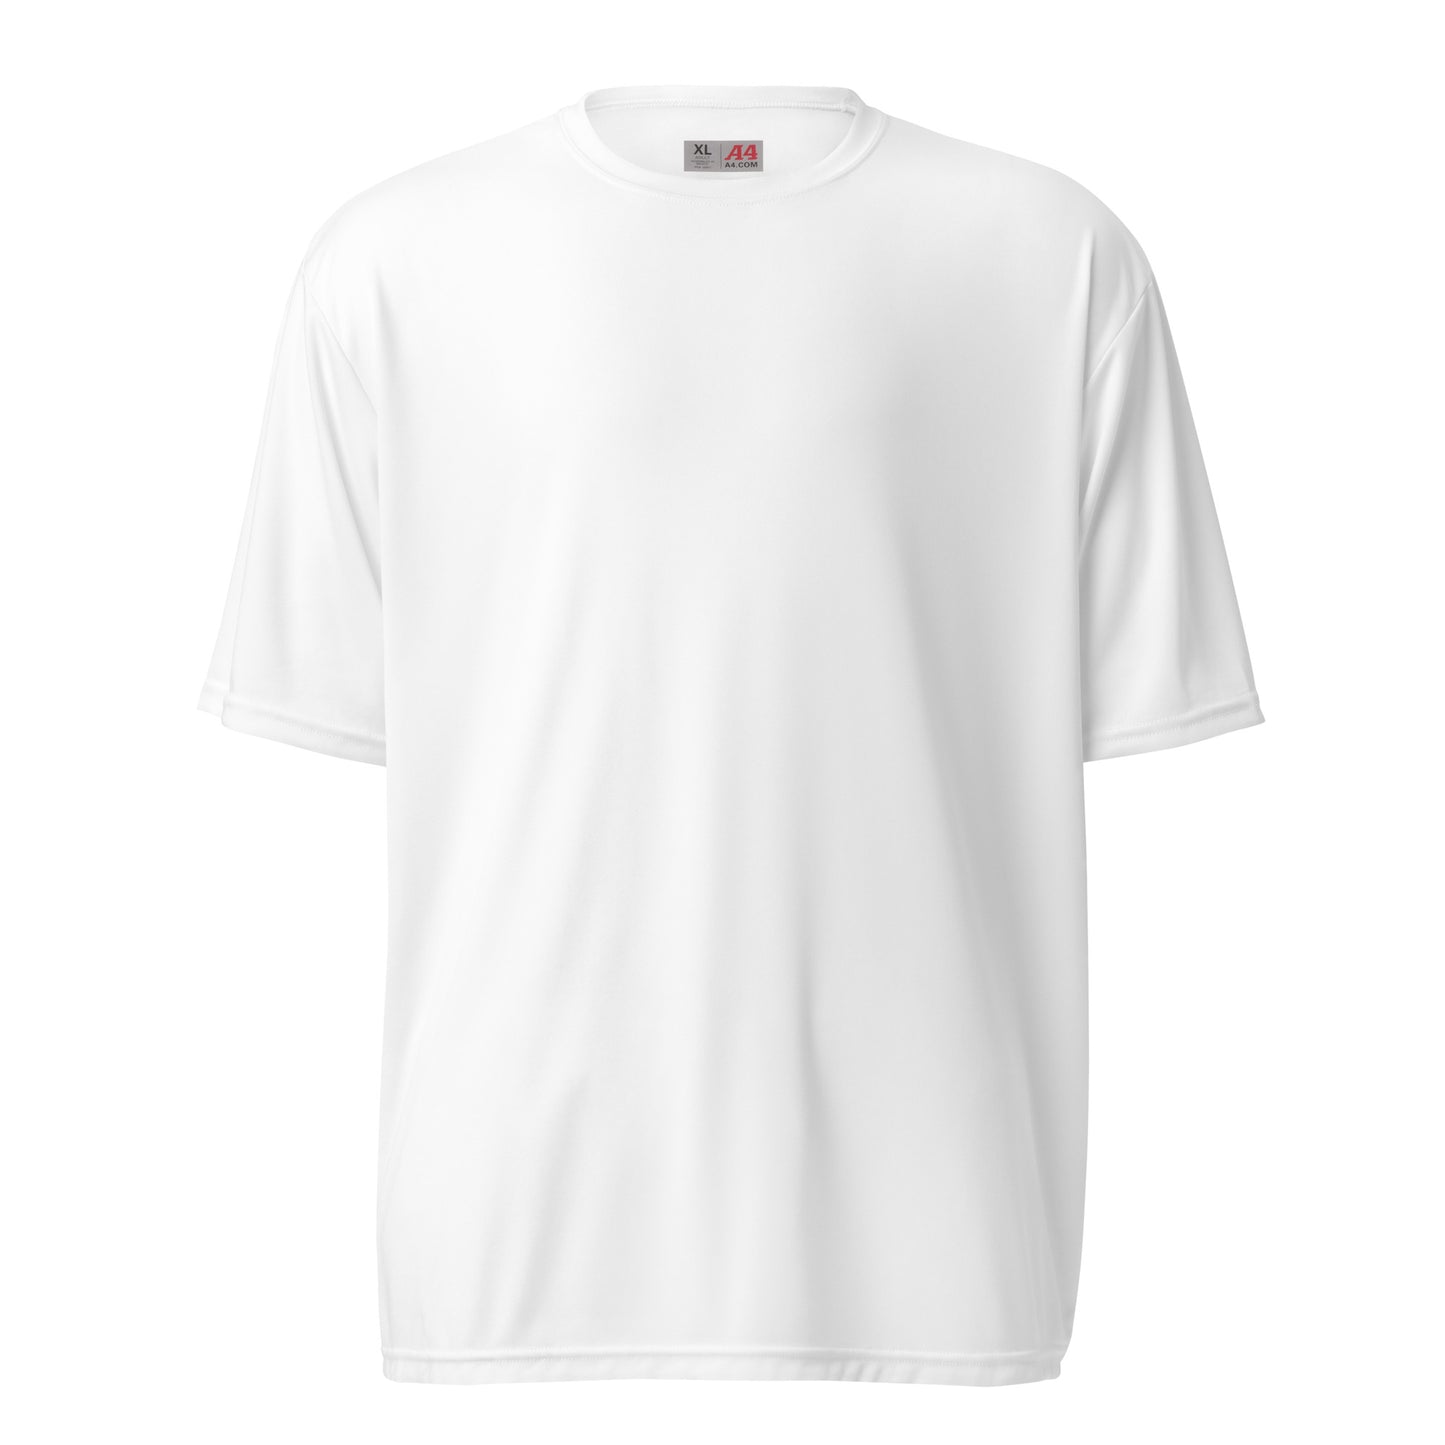 Unisex performance crew neck t-shirt - Soccer